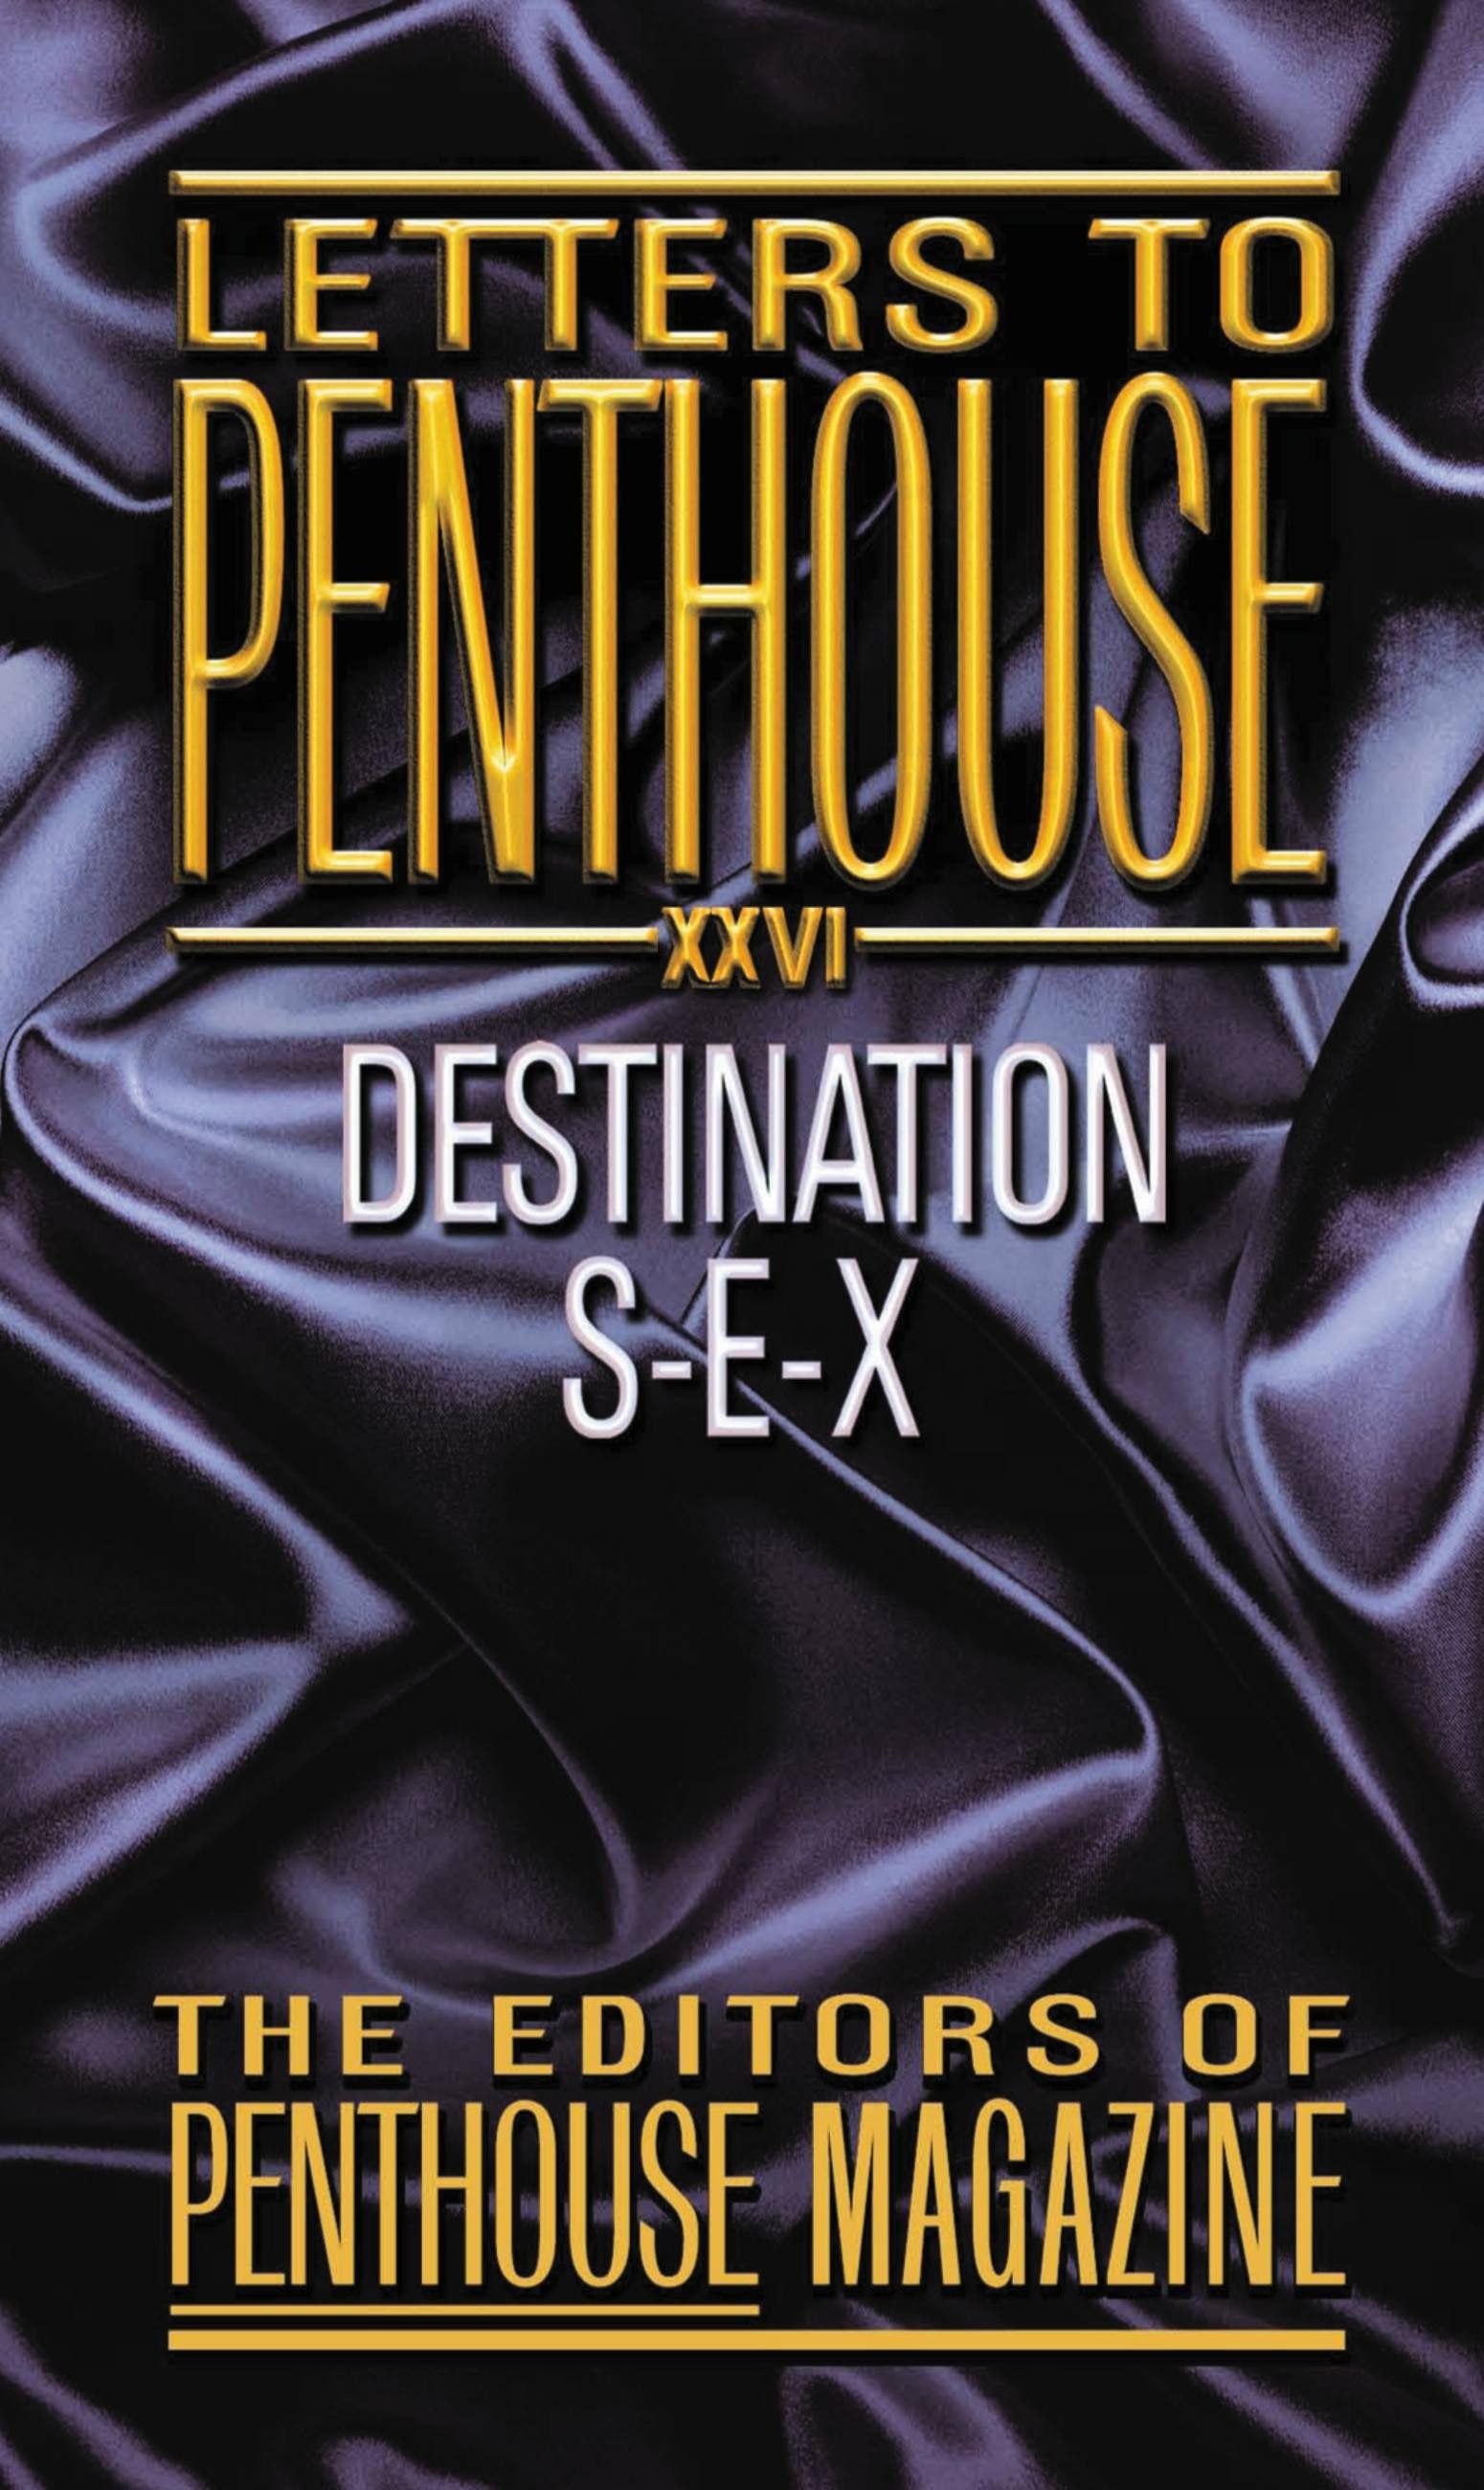 Xxvi Xxv Bf Videos - Letters to Penthouse XXVI by Penthouse International | Hachette Book Group